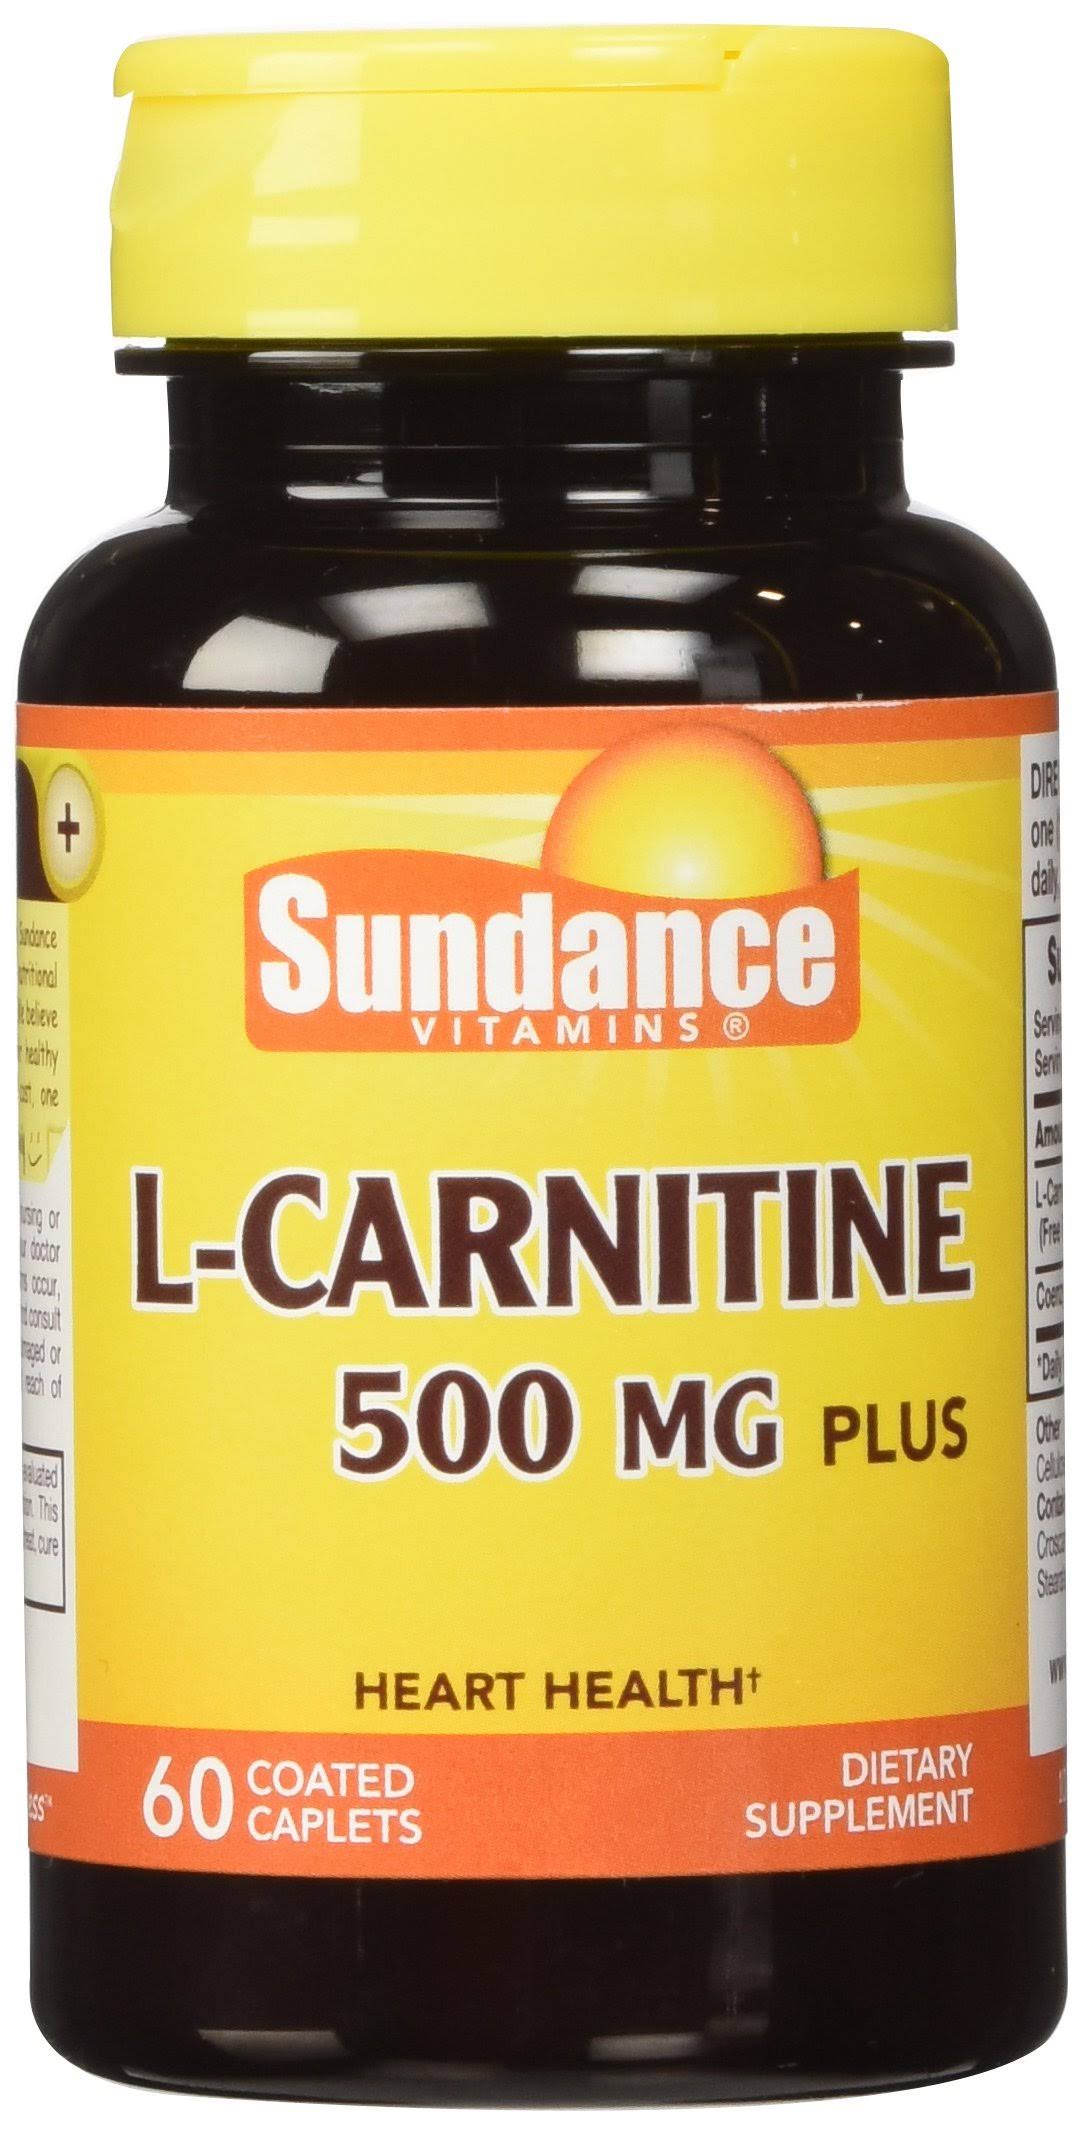 Sundance L Carnitine Plus Dietary Supplement - 60ct